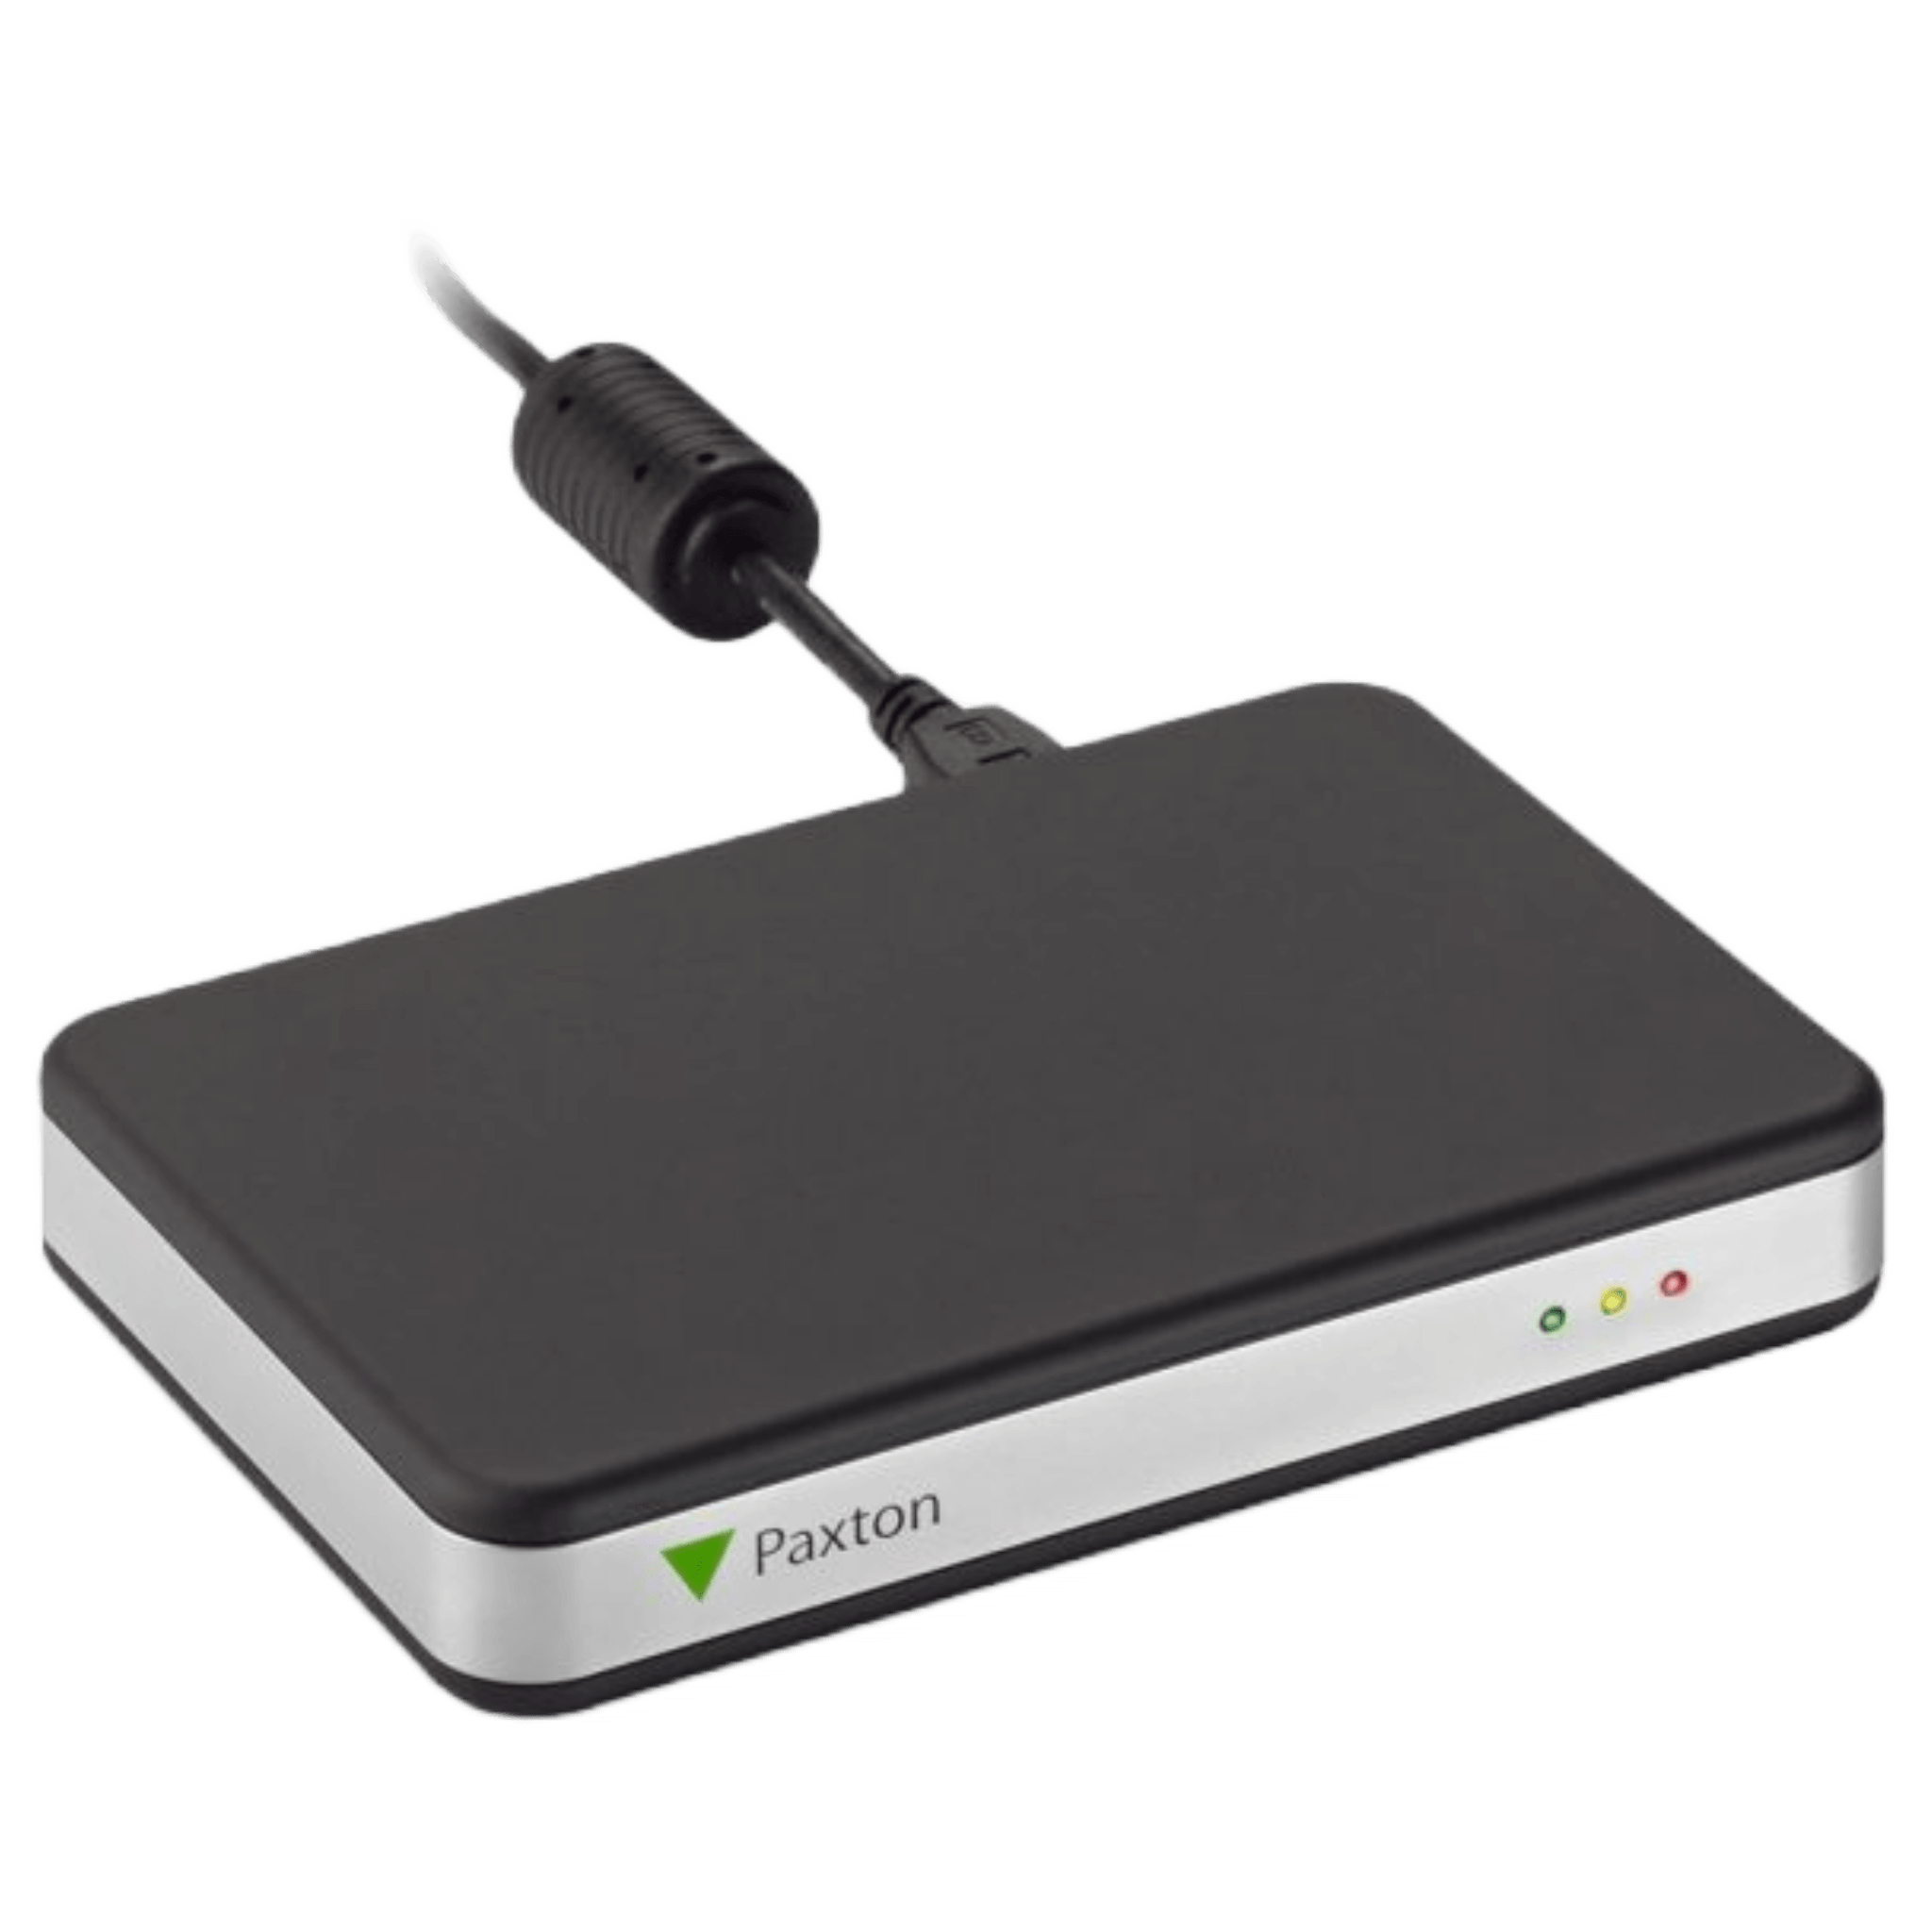 Paxton 514-326 Net2 Proximity Card Reader, USB